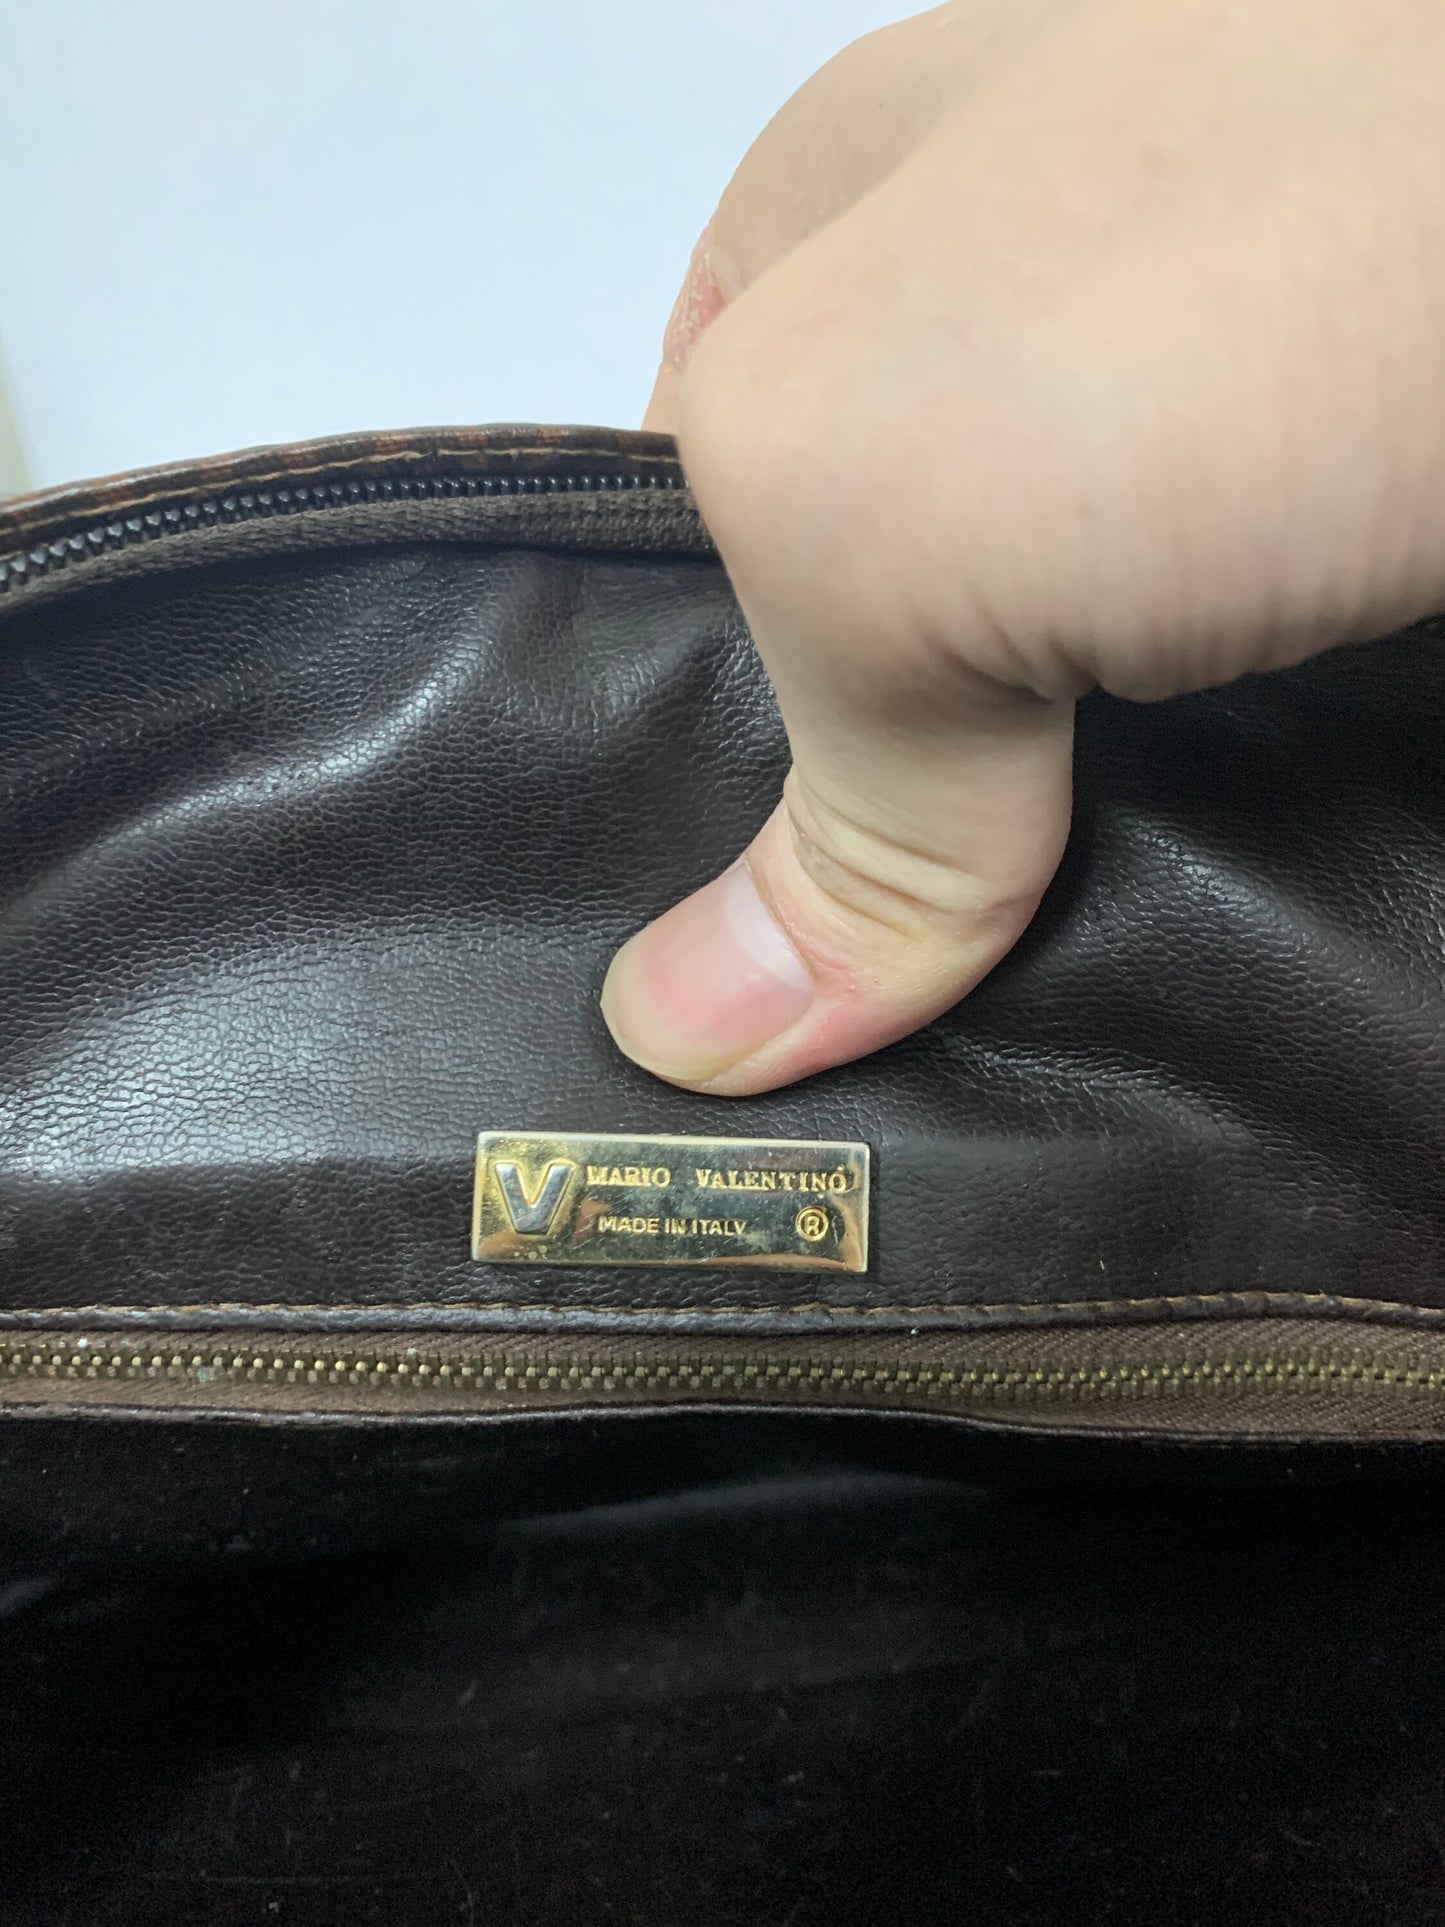 V Mario Valentino  made in Italy handbag 29cmx23cm (BbW 10 25Apr 2022)